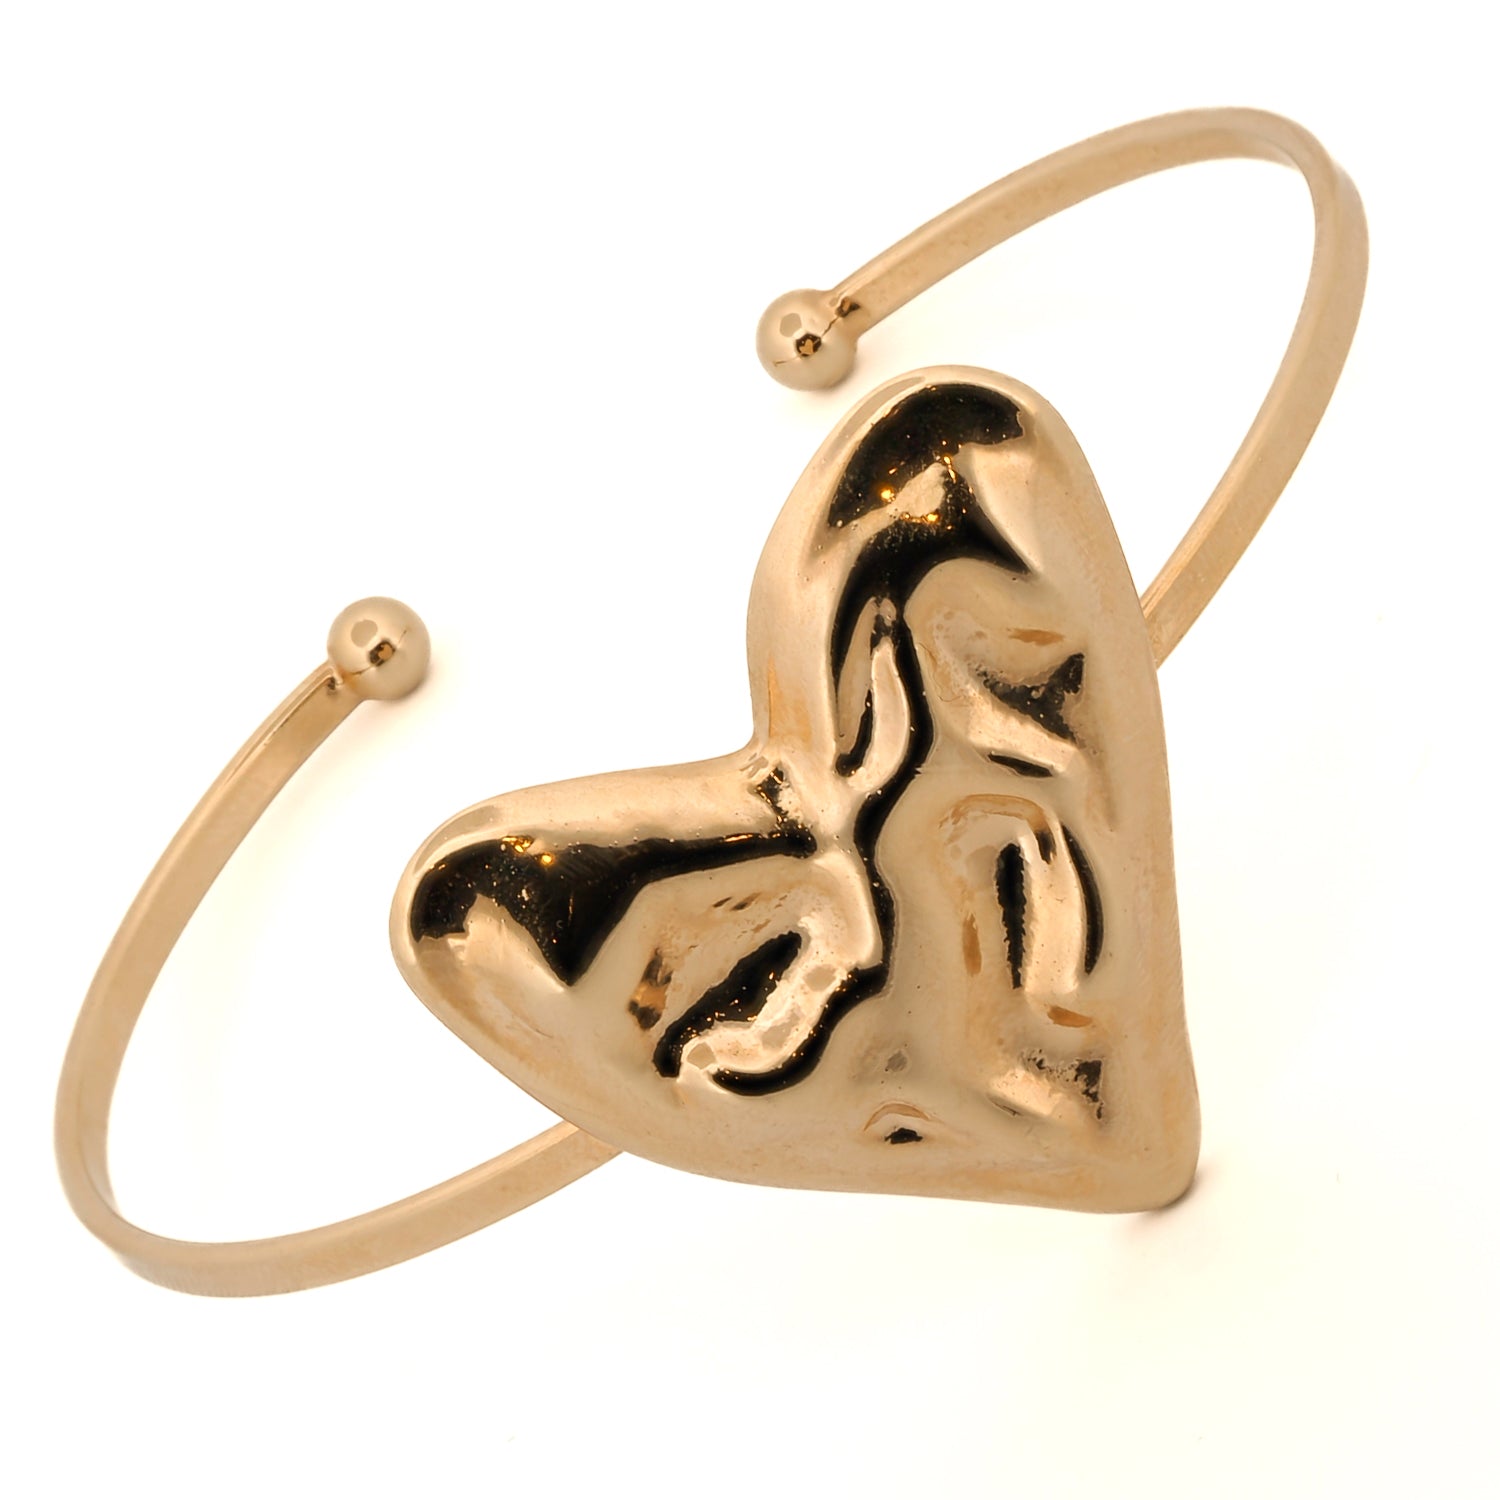 Stunning Visual Impact: Brass Bracelet with Heart Design